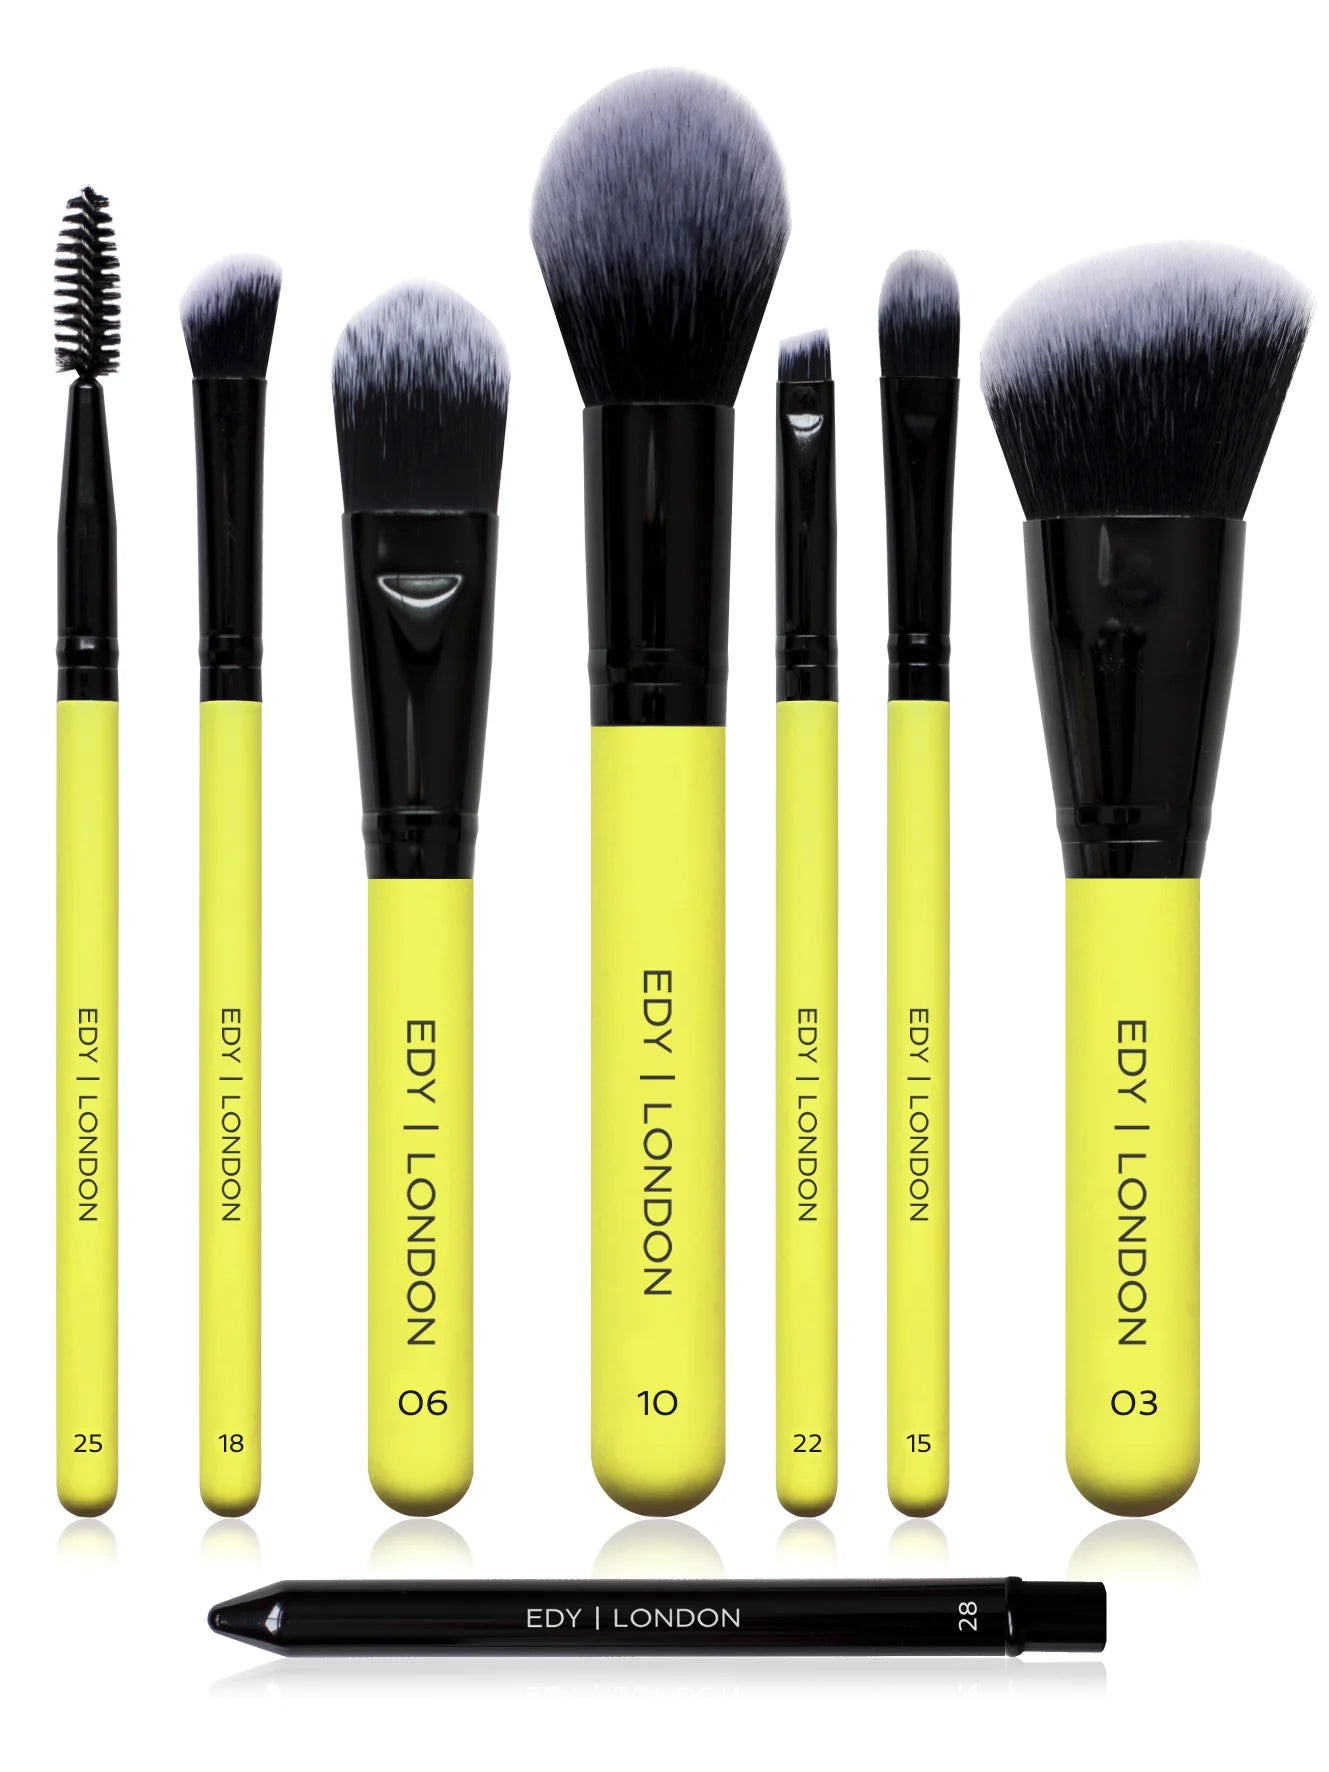 Essential Brush Set 505 Make-up Brush EDY LONDON Lemon   - EDY LONDON PRODUCTS UK - The Best Makeup Brushes - shop.edy.london